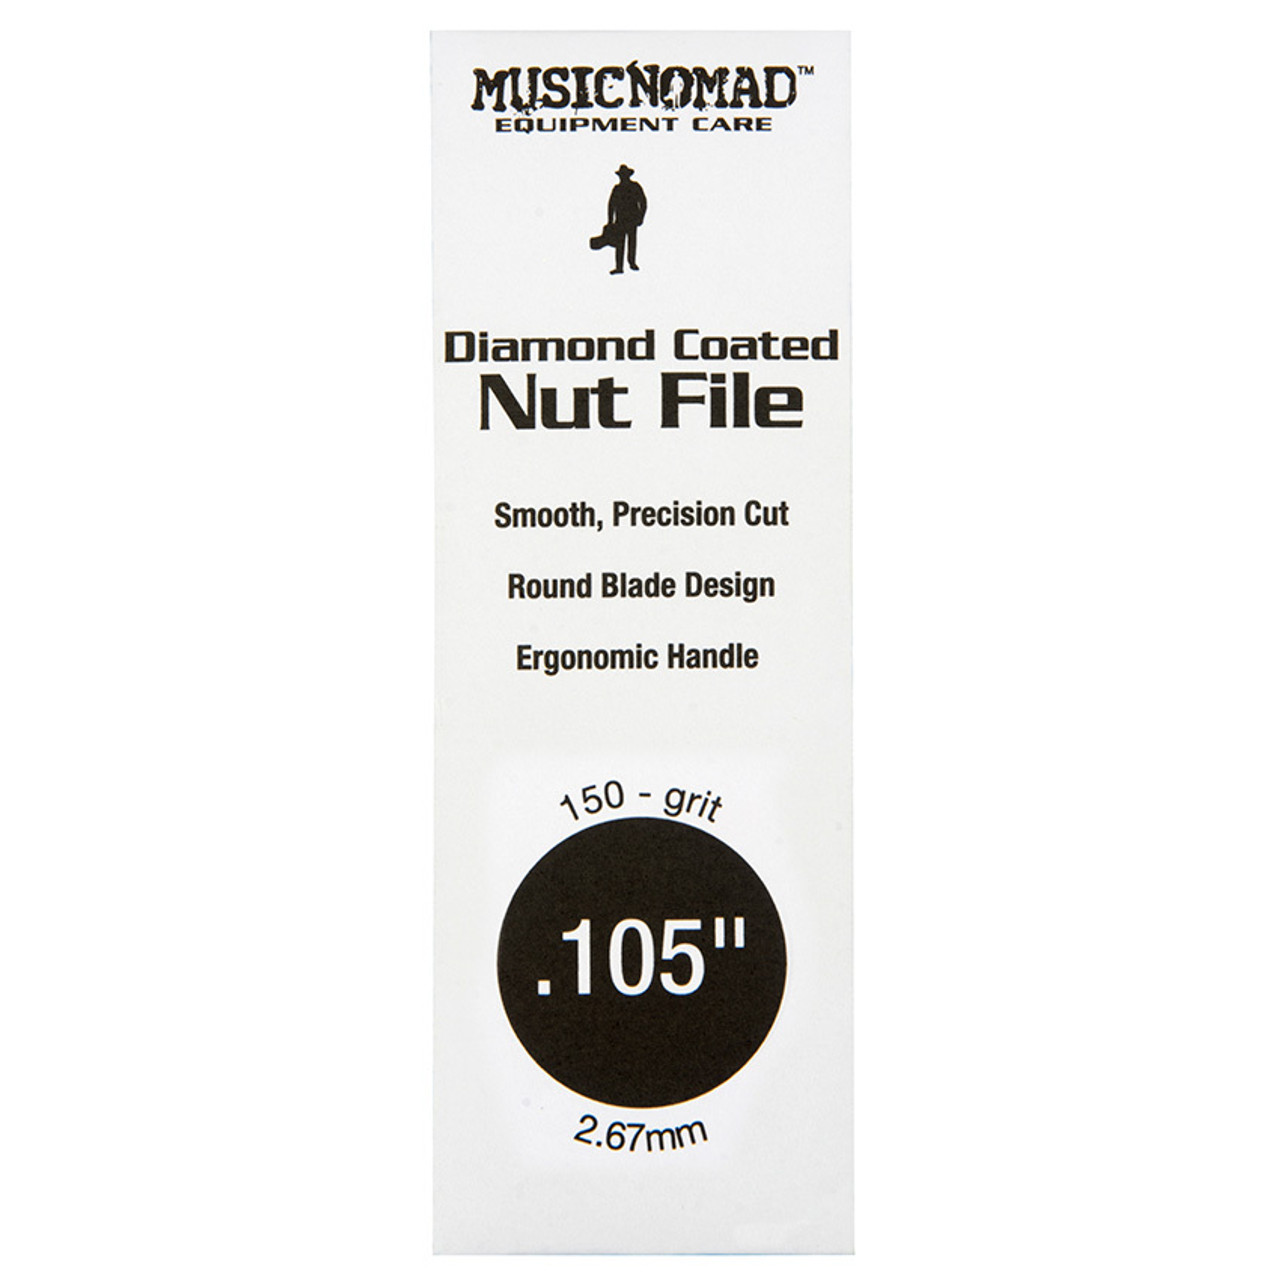 Music Nomad Diamond Coated 105" Nut File (1-Pce)